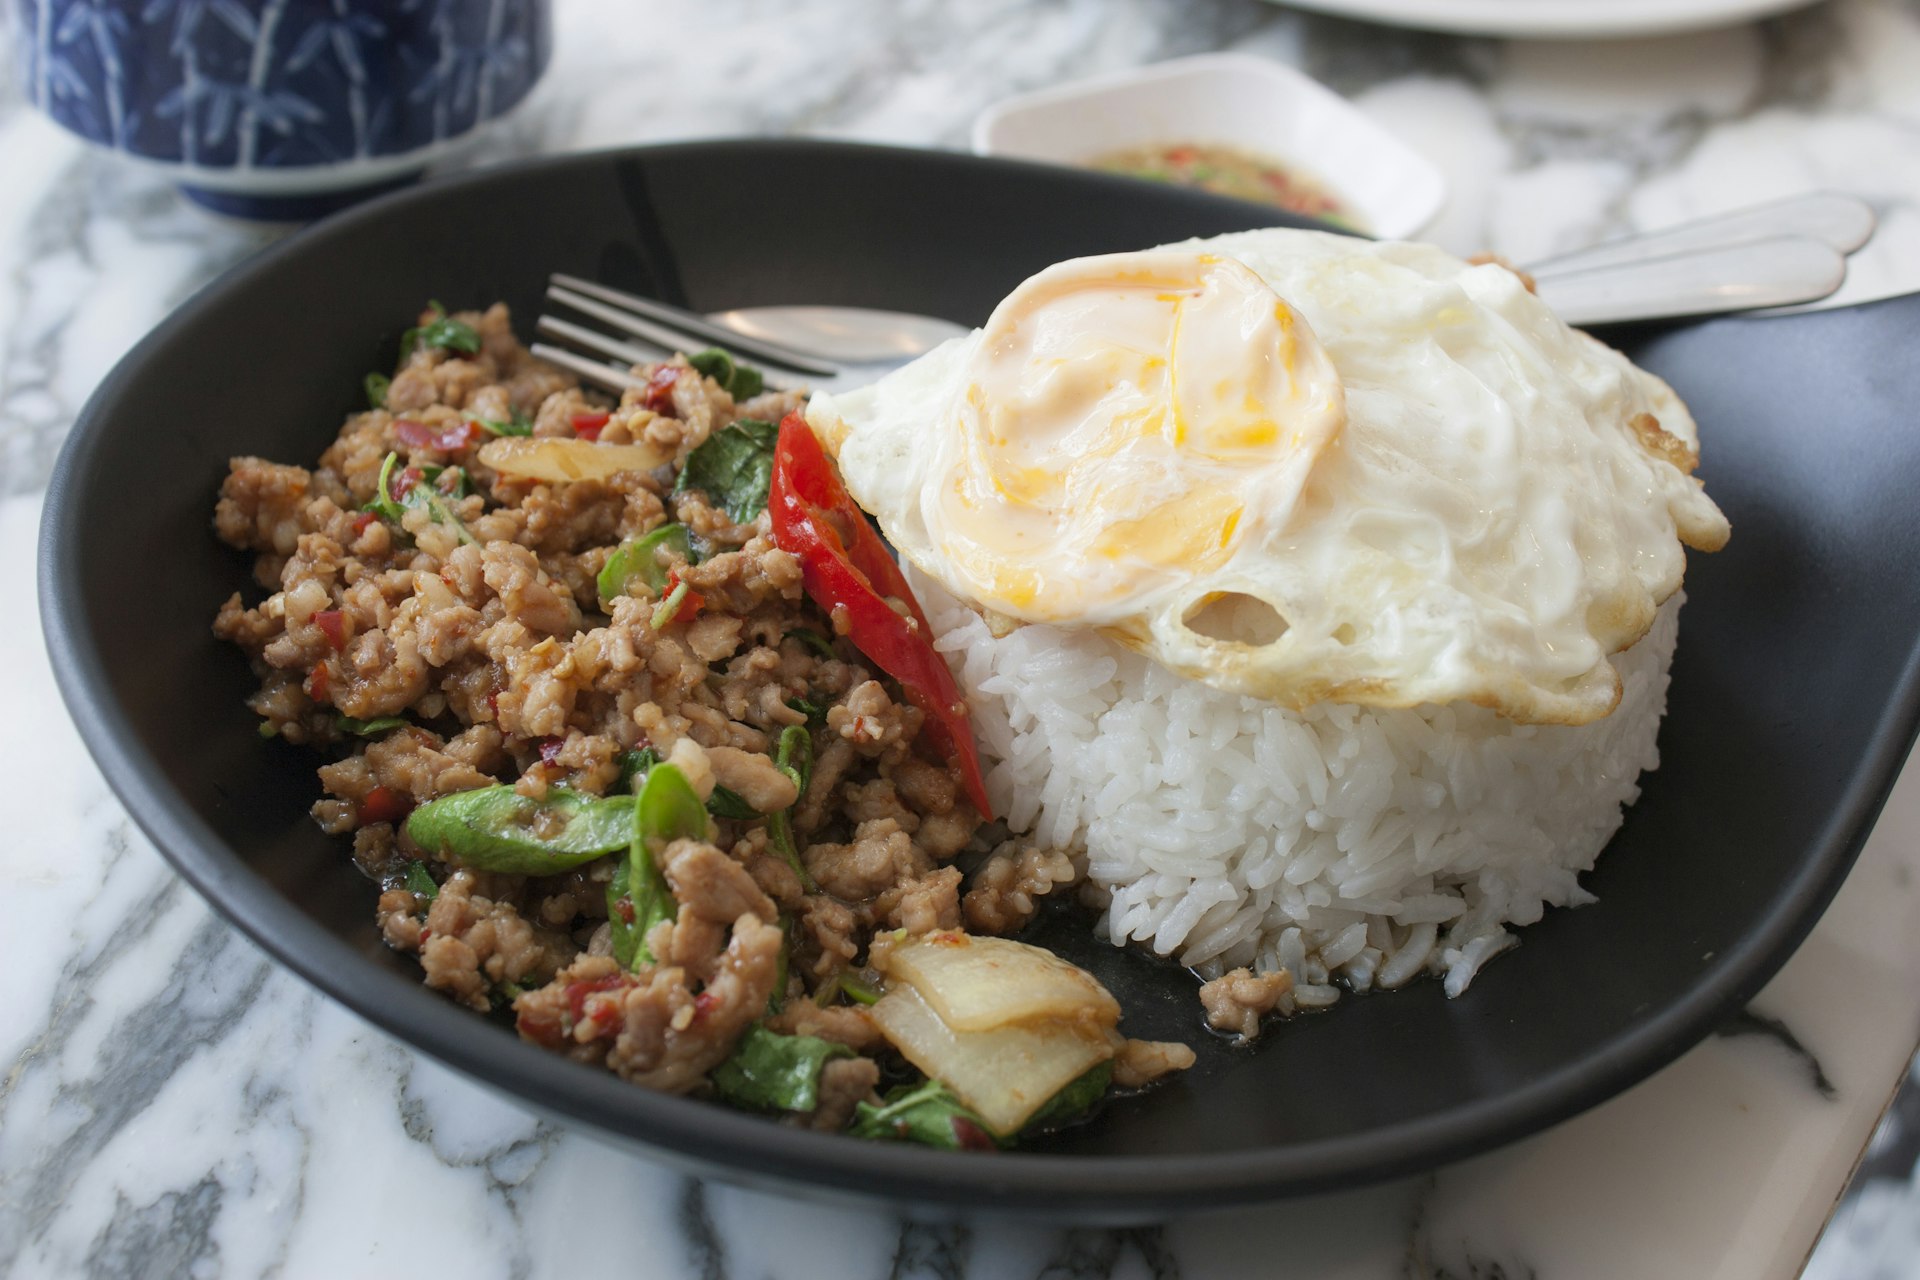 A dish of pork pad kra pao, stir-fried minced pork with Thai basil, chili and a fried egg